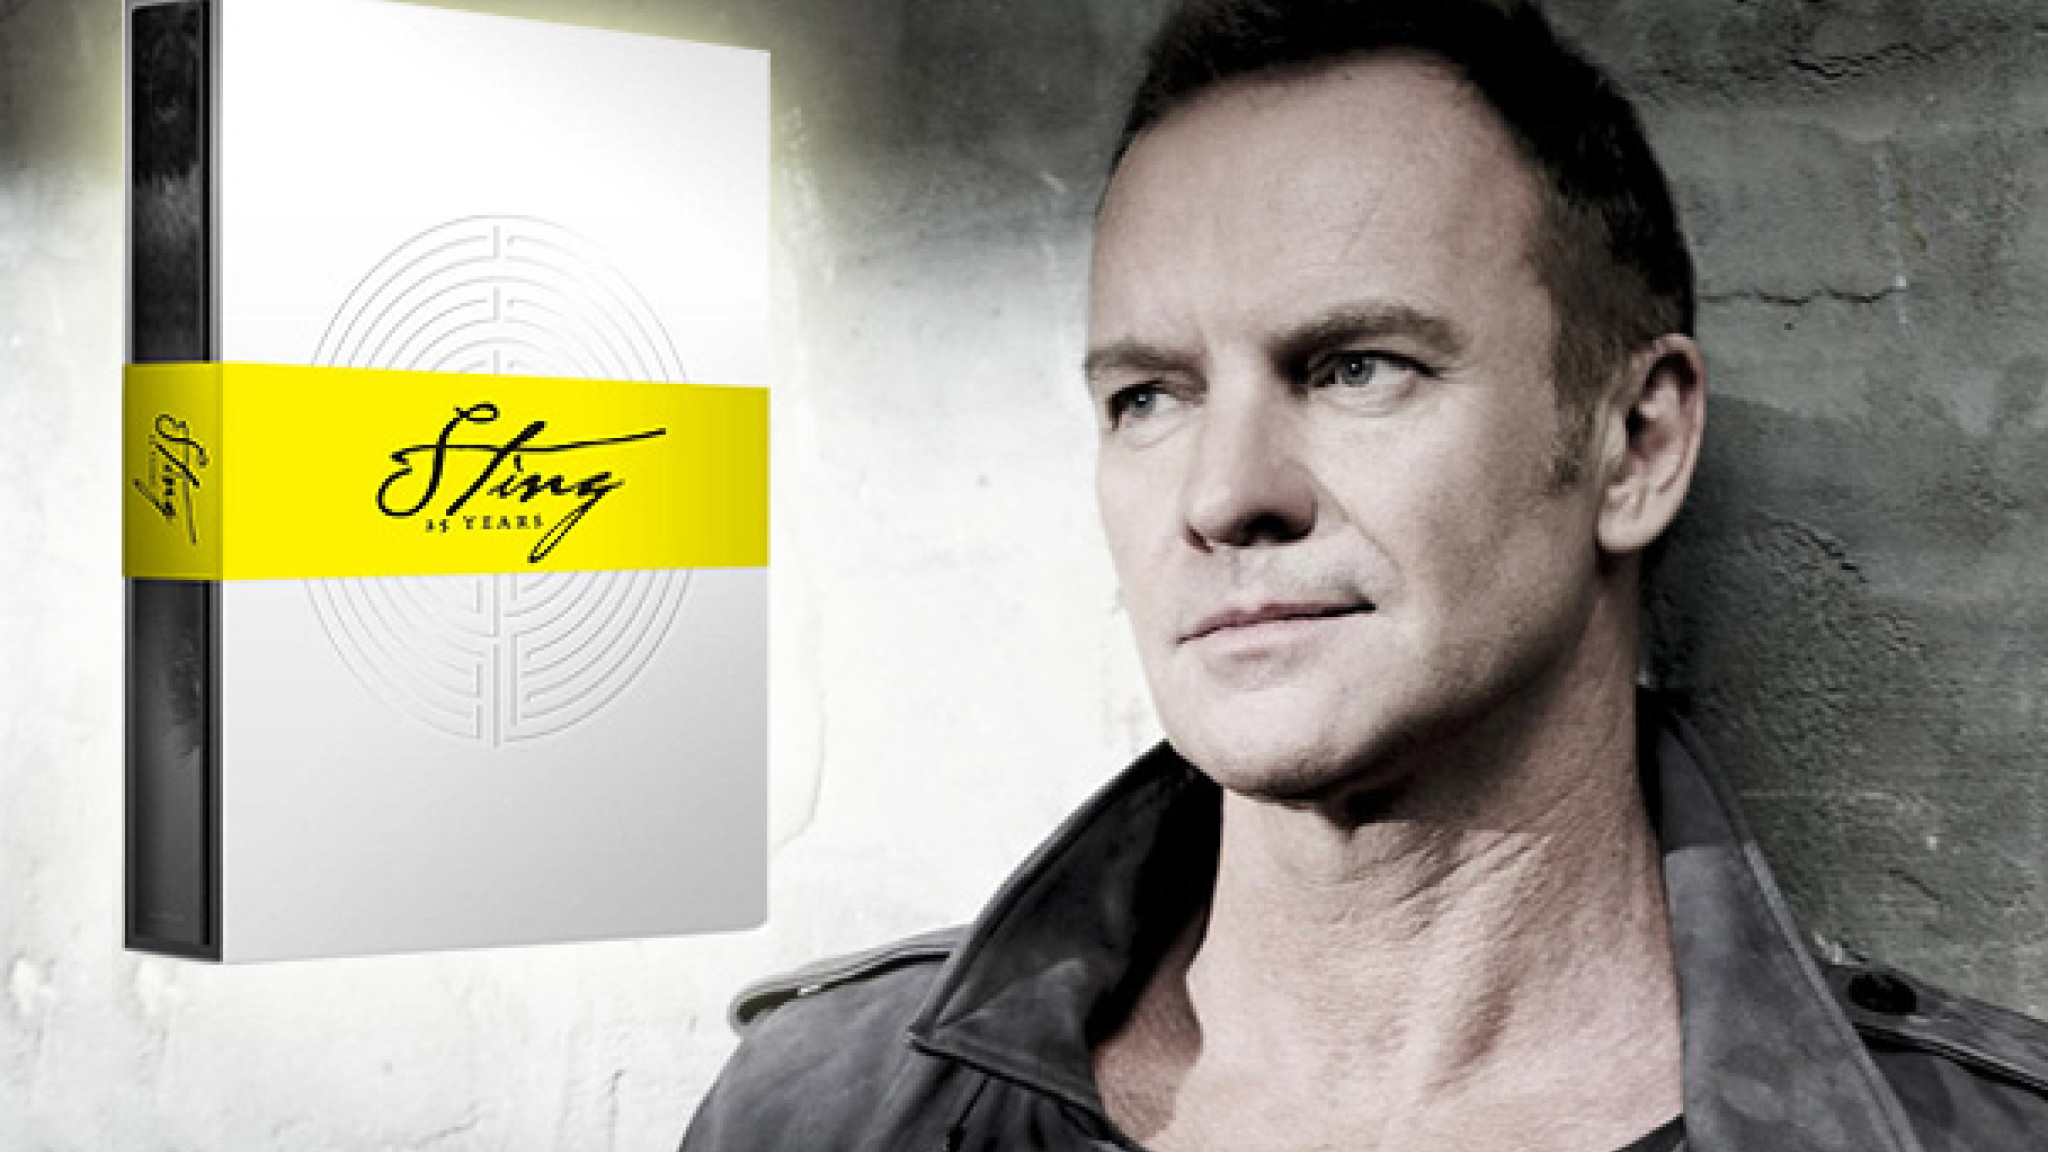 Sting - 25 Years Box - UMG Top Story